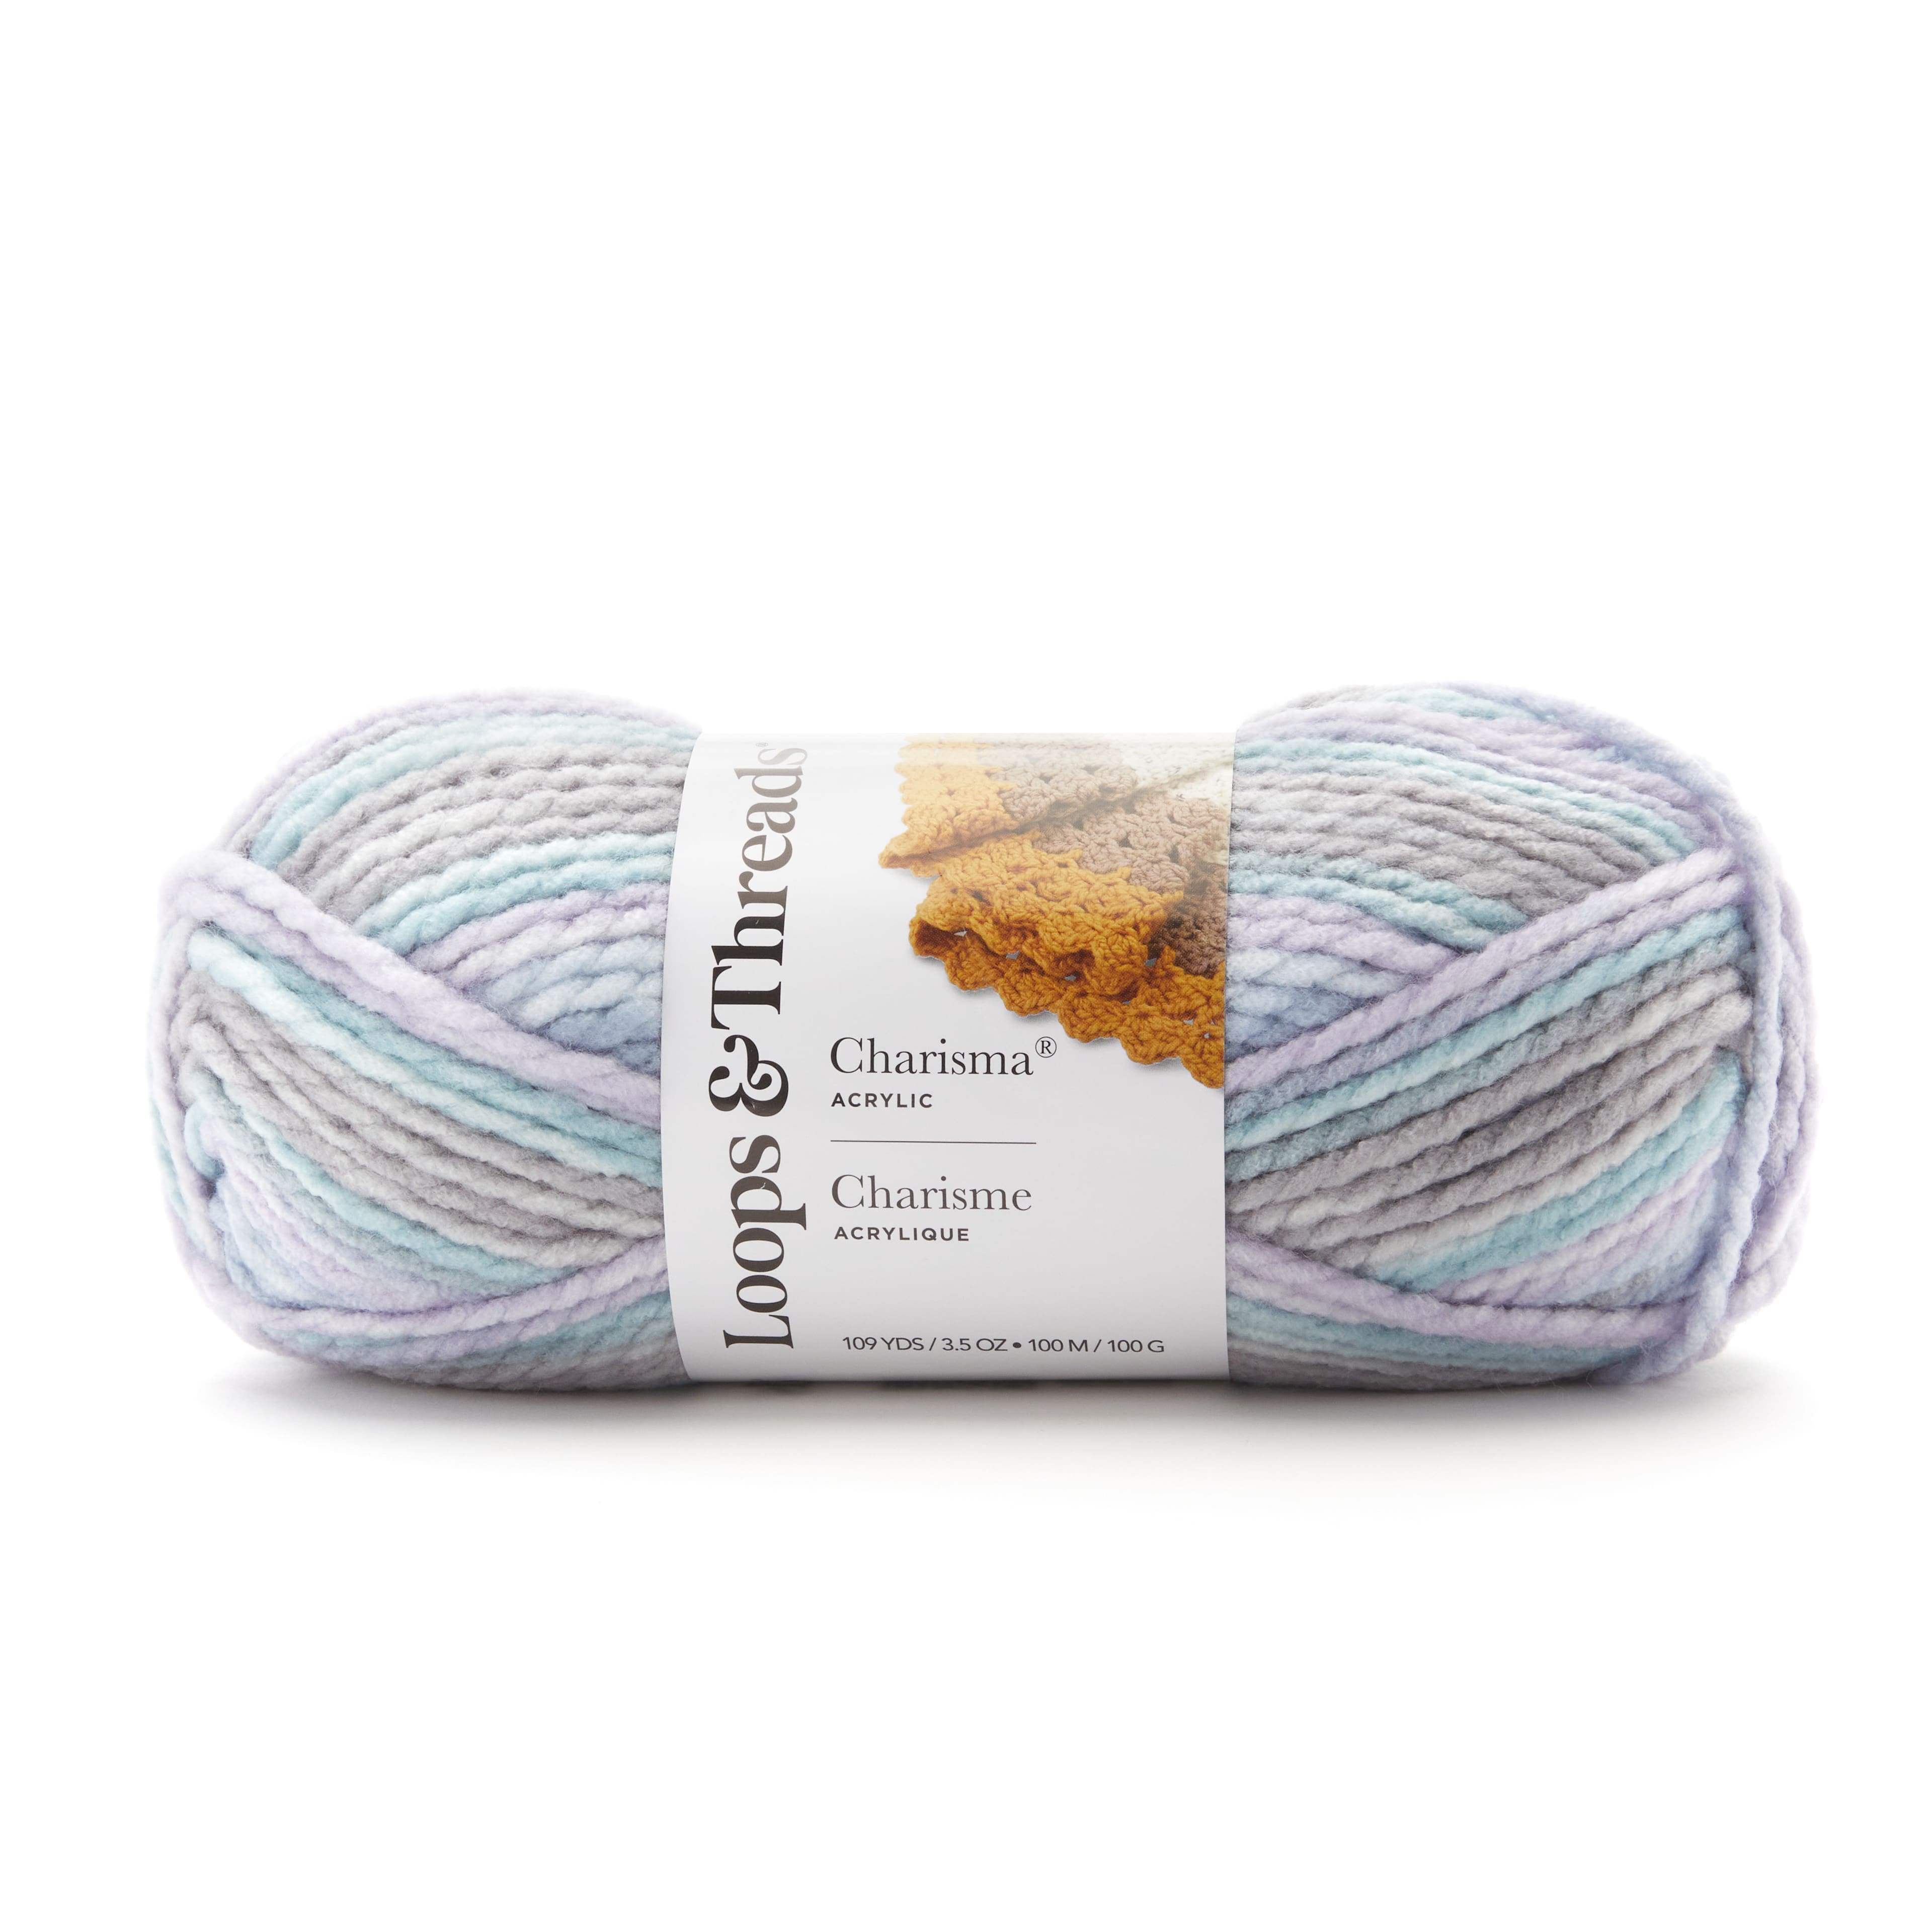 Loops & Threads michaels bulk 15 pack: charisma yarn by loops & threads